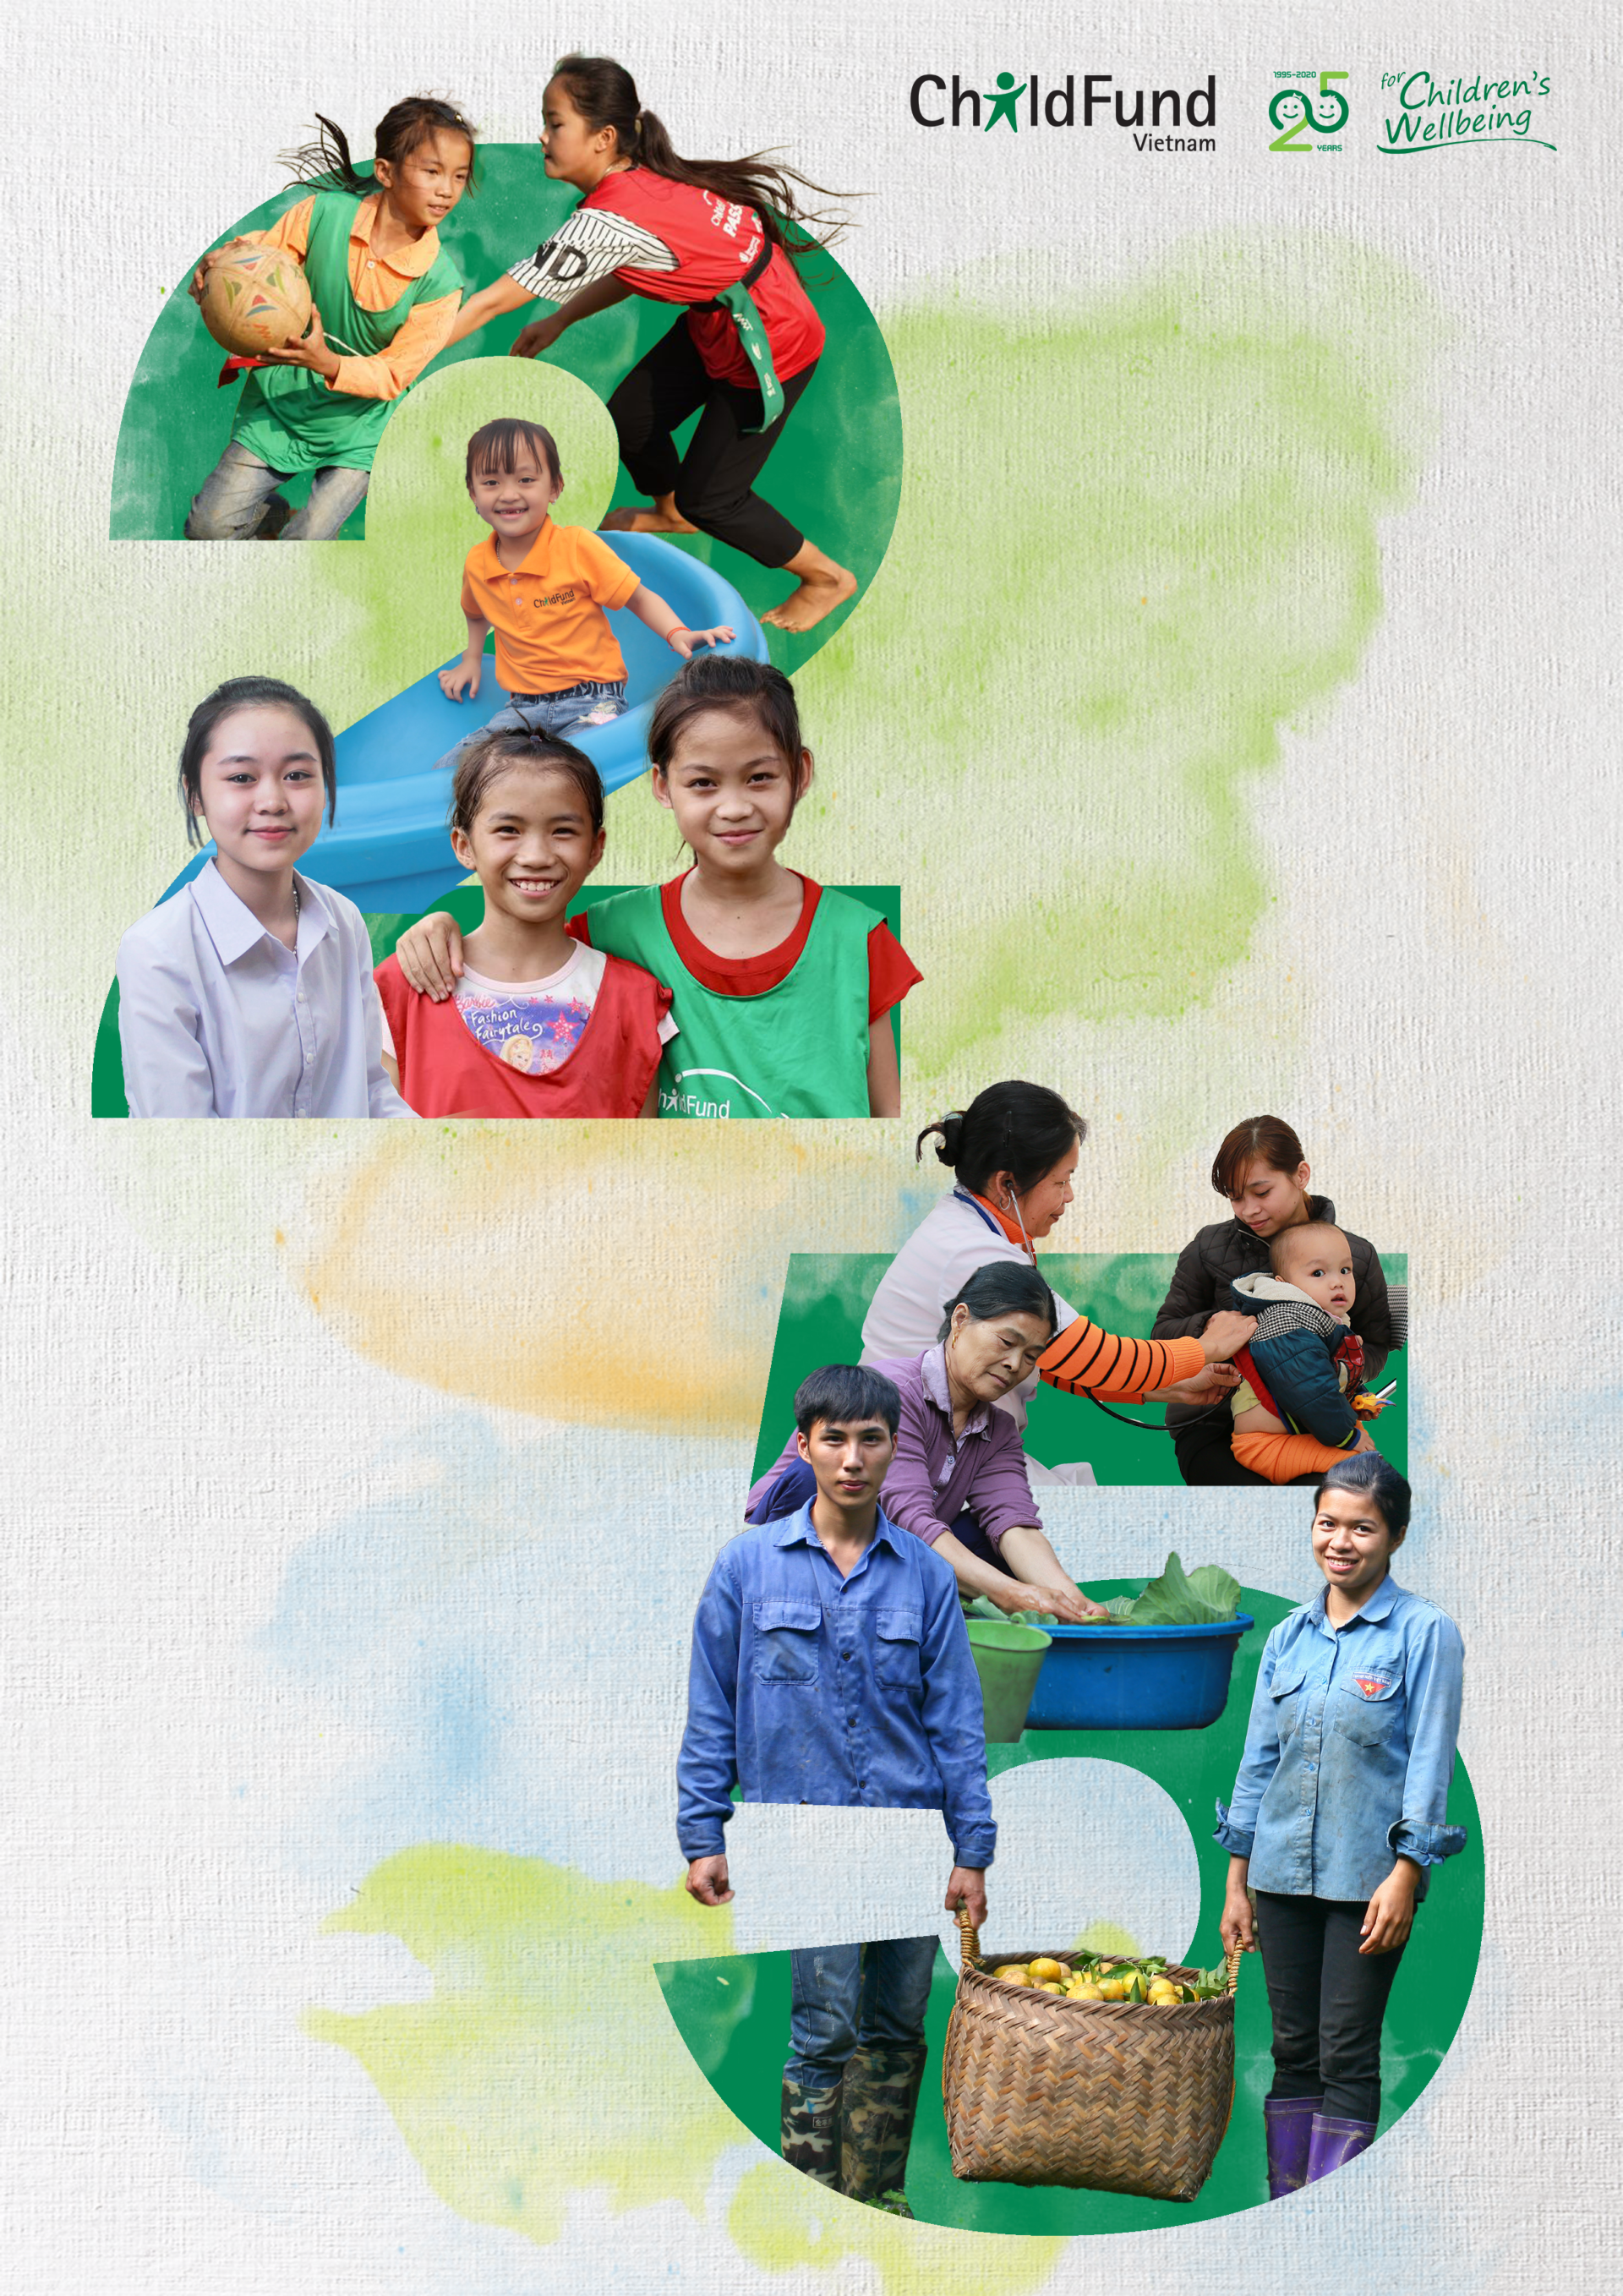 25 Years of ChildFund Vietnam